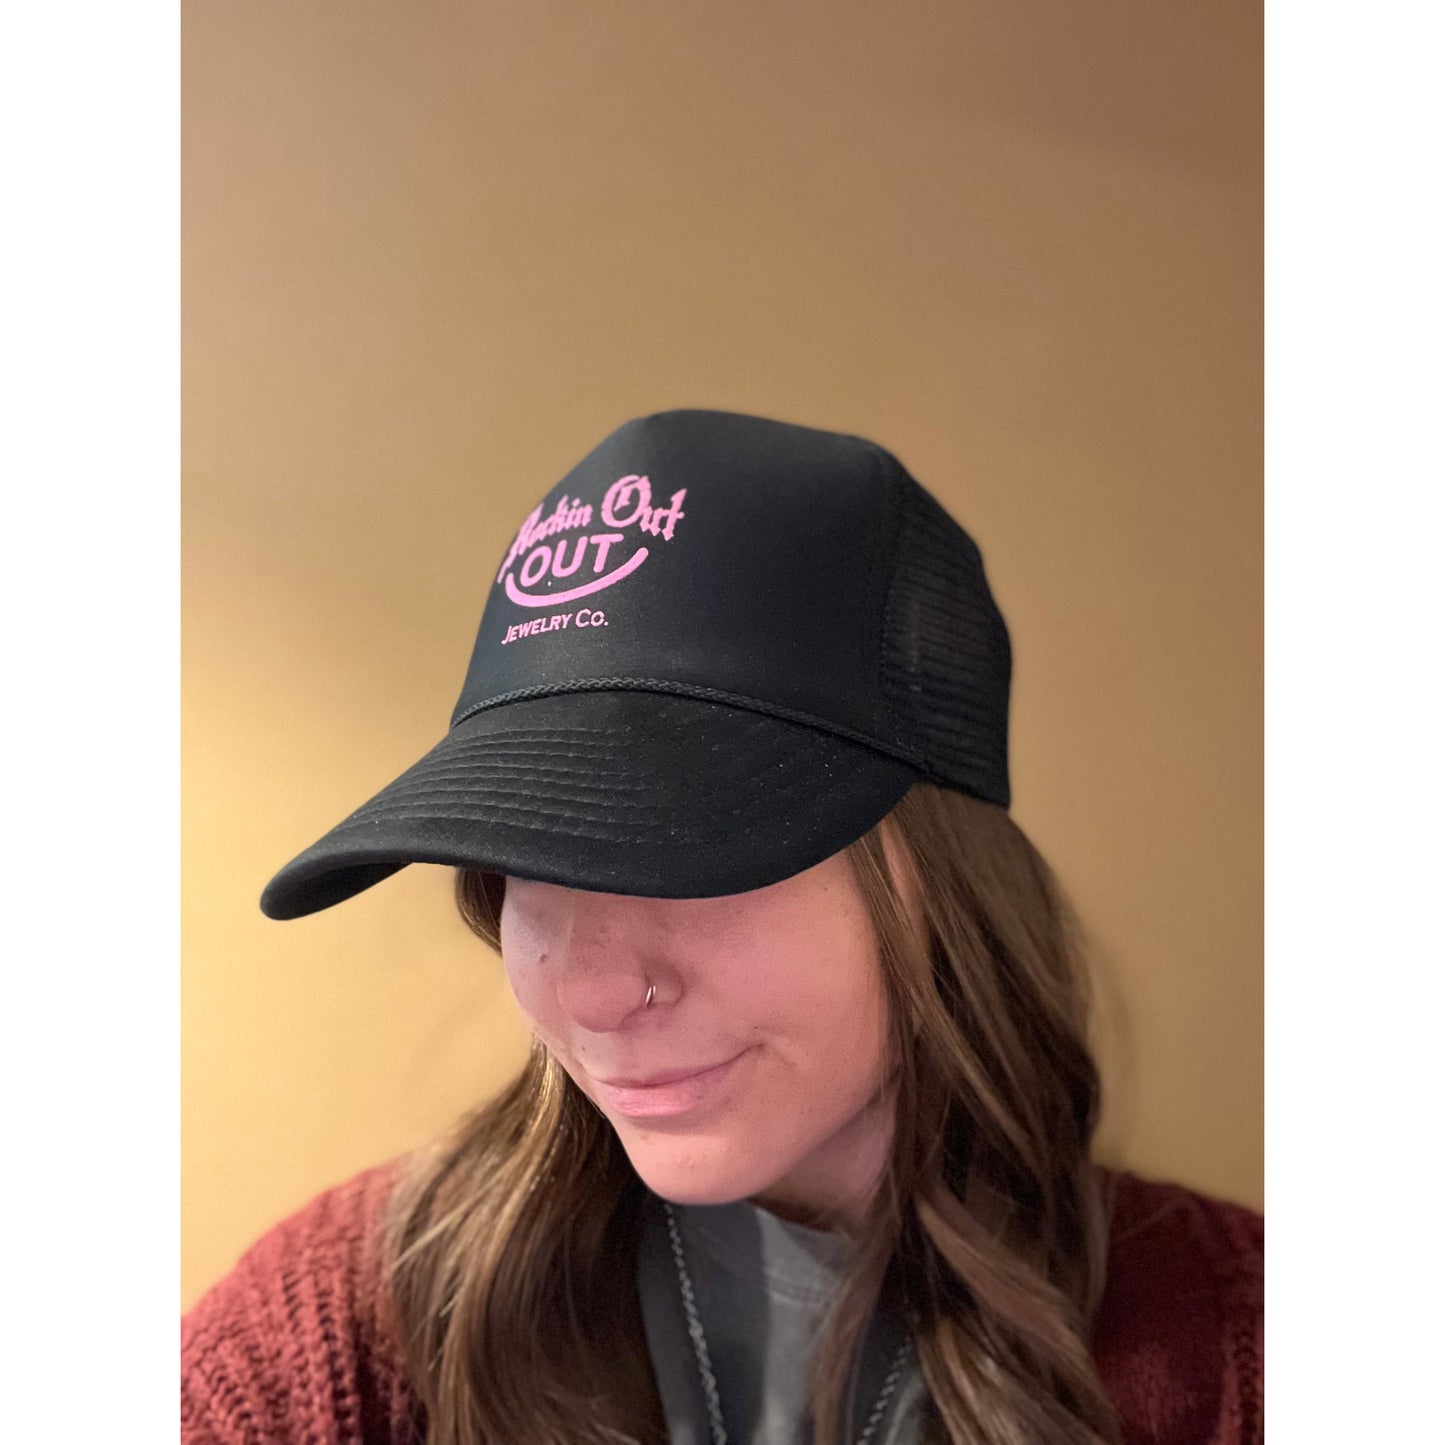 Pink Rockin Out hat